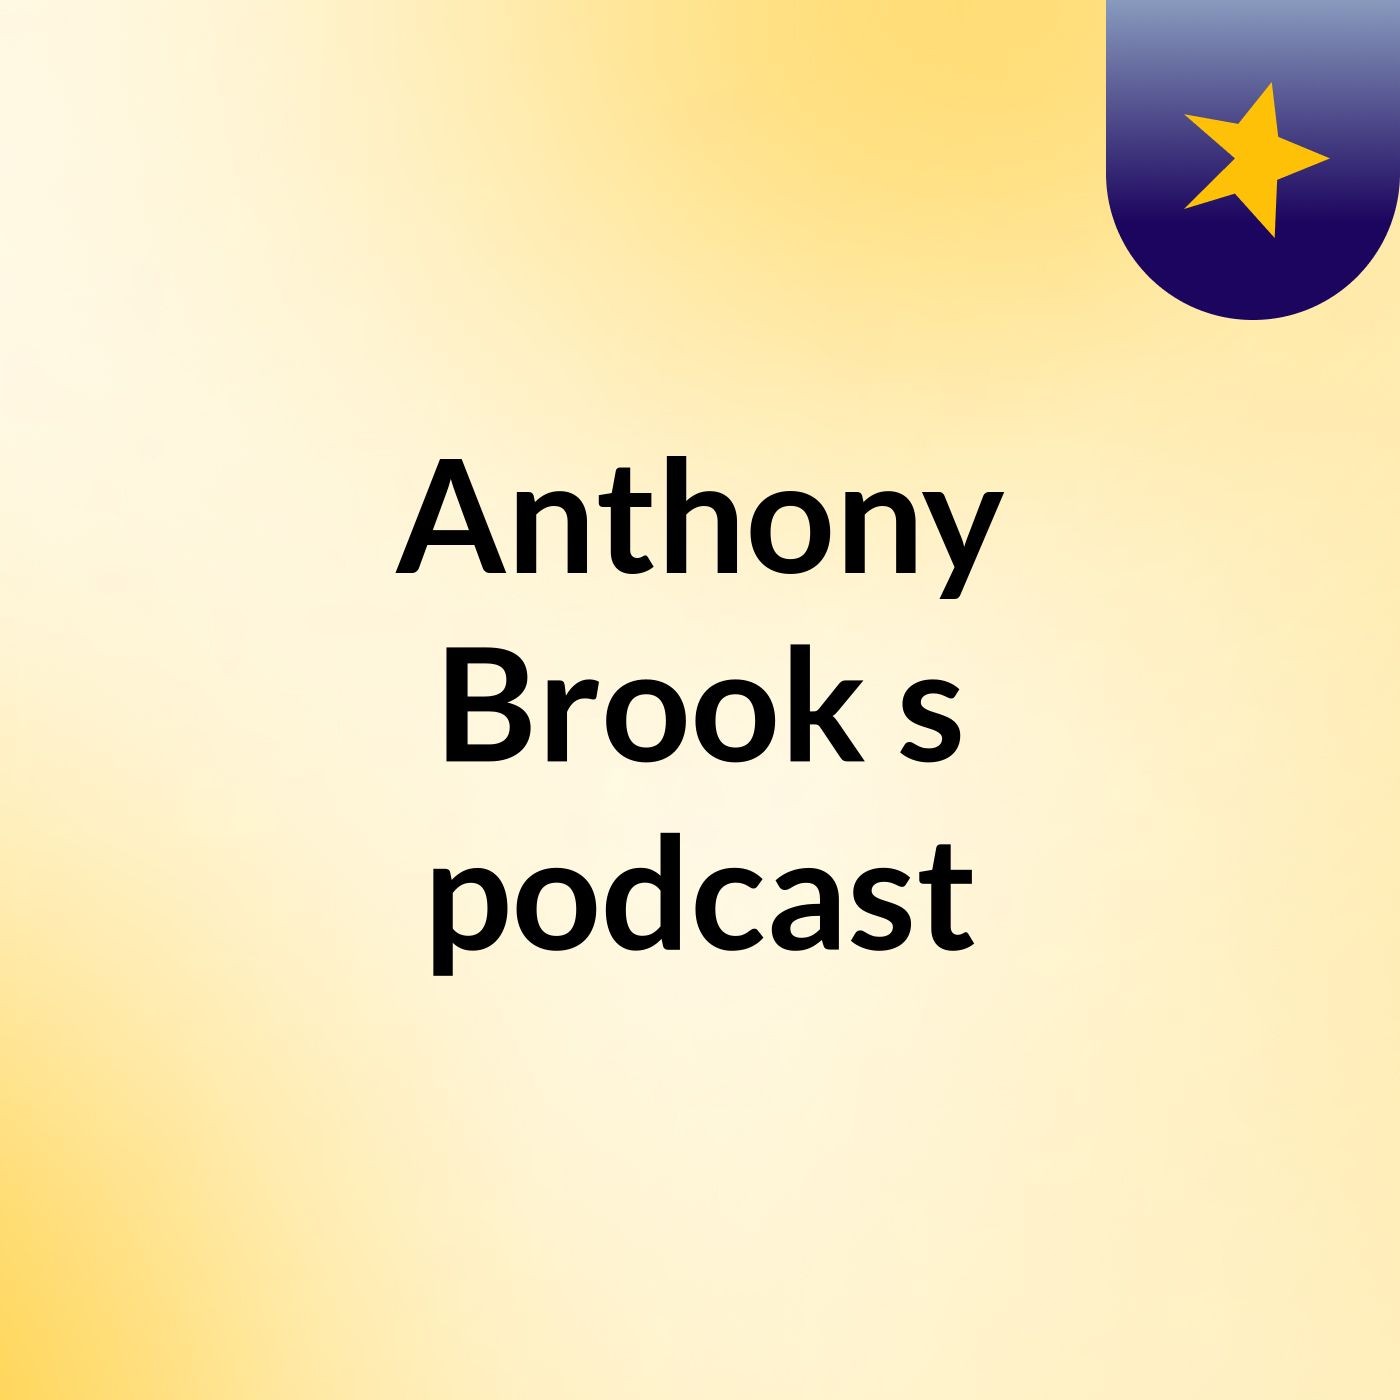 Anthony Brook's podcast